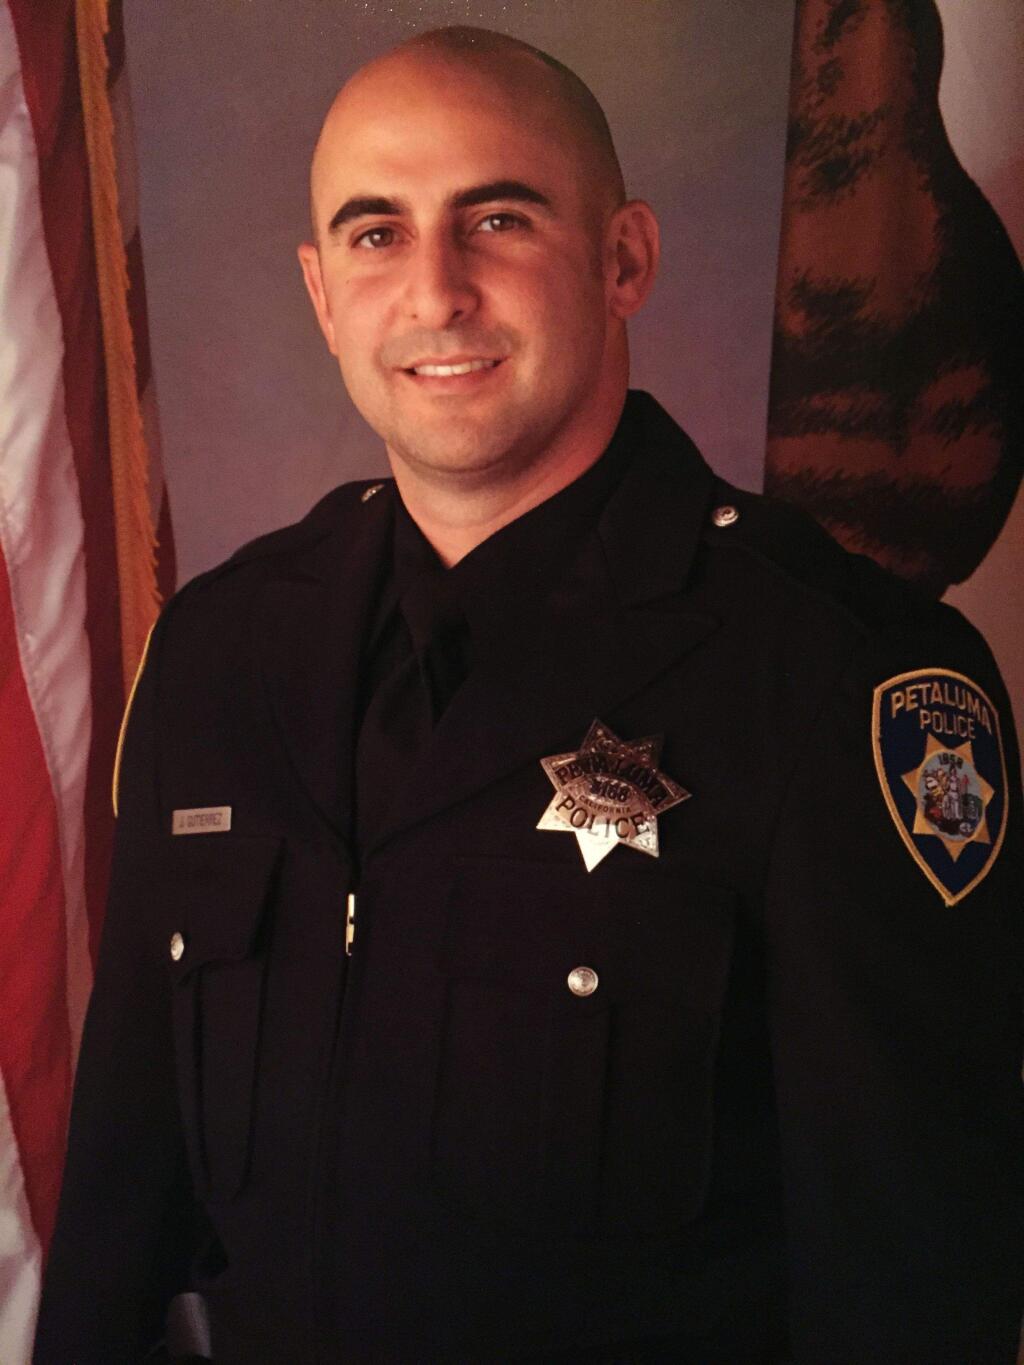 Jake Gutierrez is the 2018 Petaluma Police Officer of the Year.